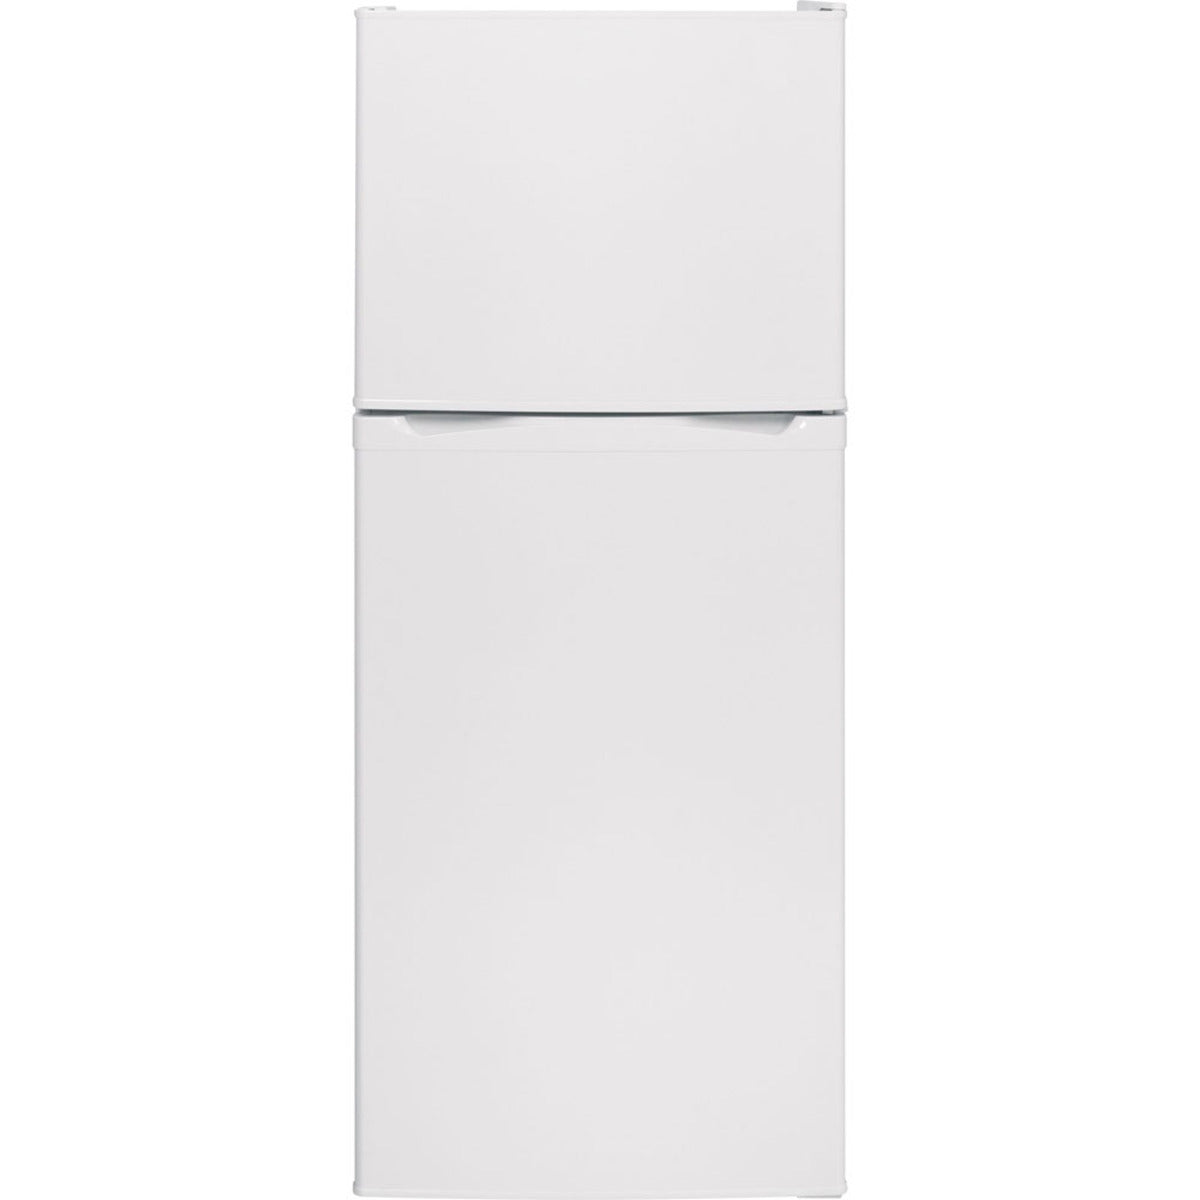 Moffat - 24.02 Inch 11.55 cu. ft Top Mount Refrigerator in White - MPE12FGKWW